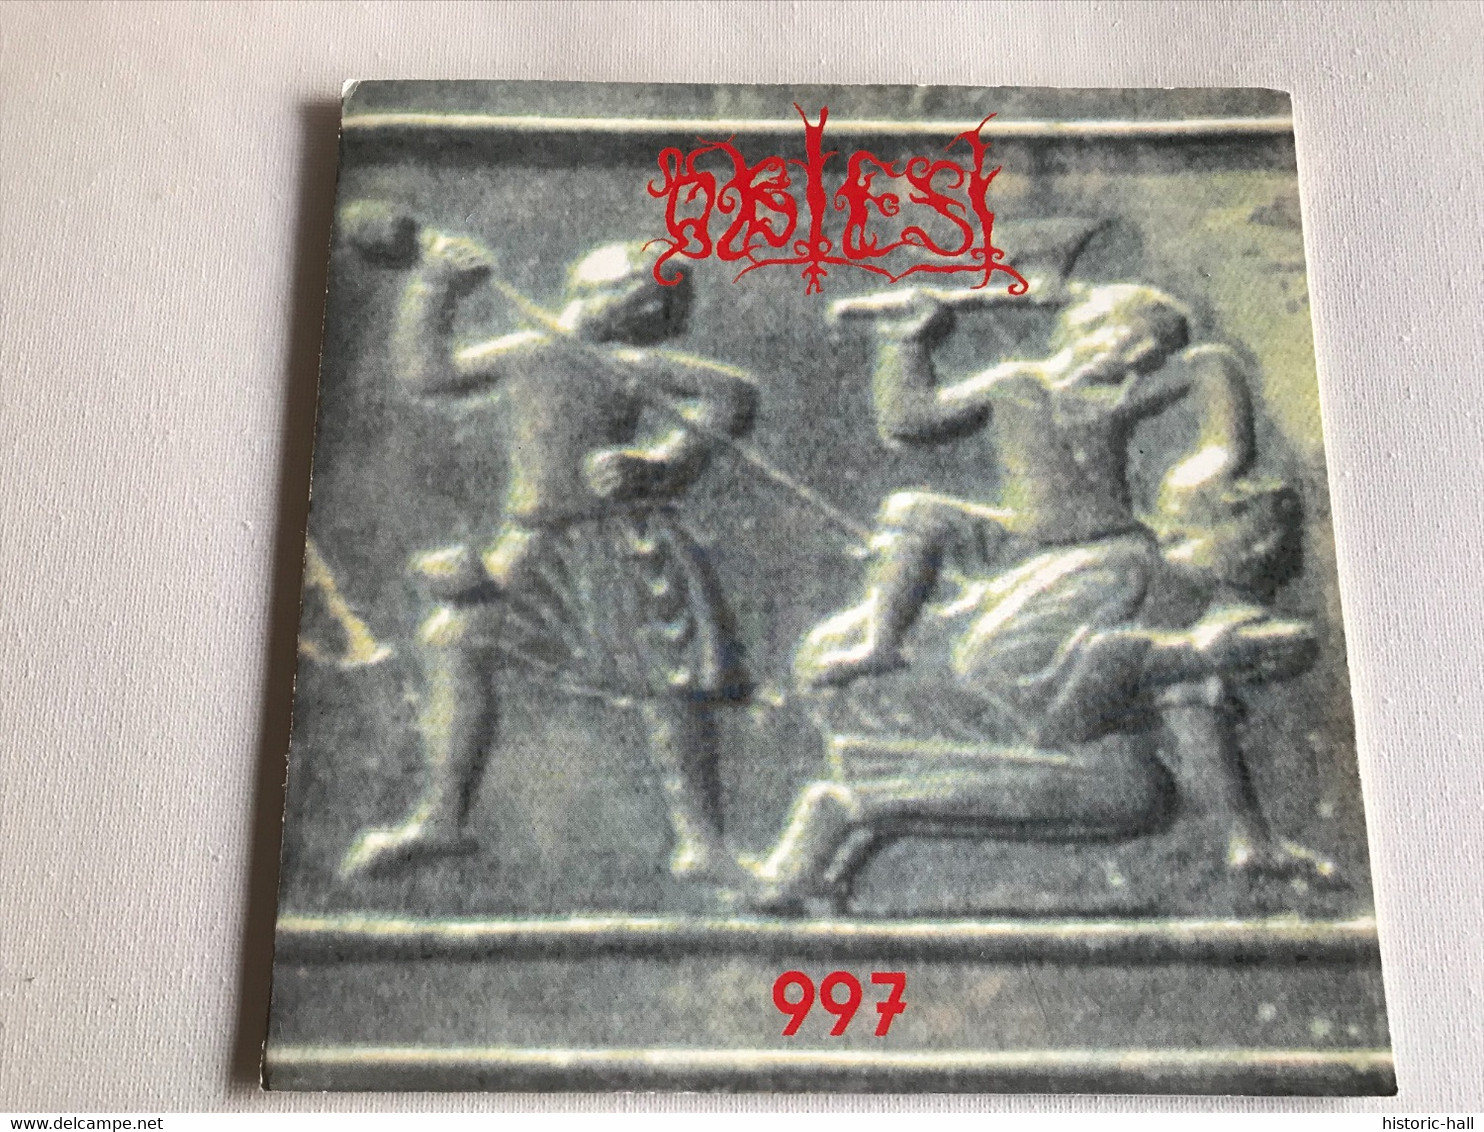 OBTEST - 997 - 45t - 1998 500ex - Hard Rock En Metal